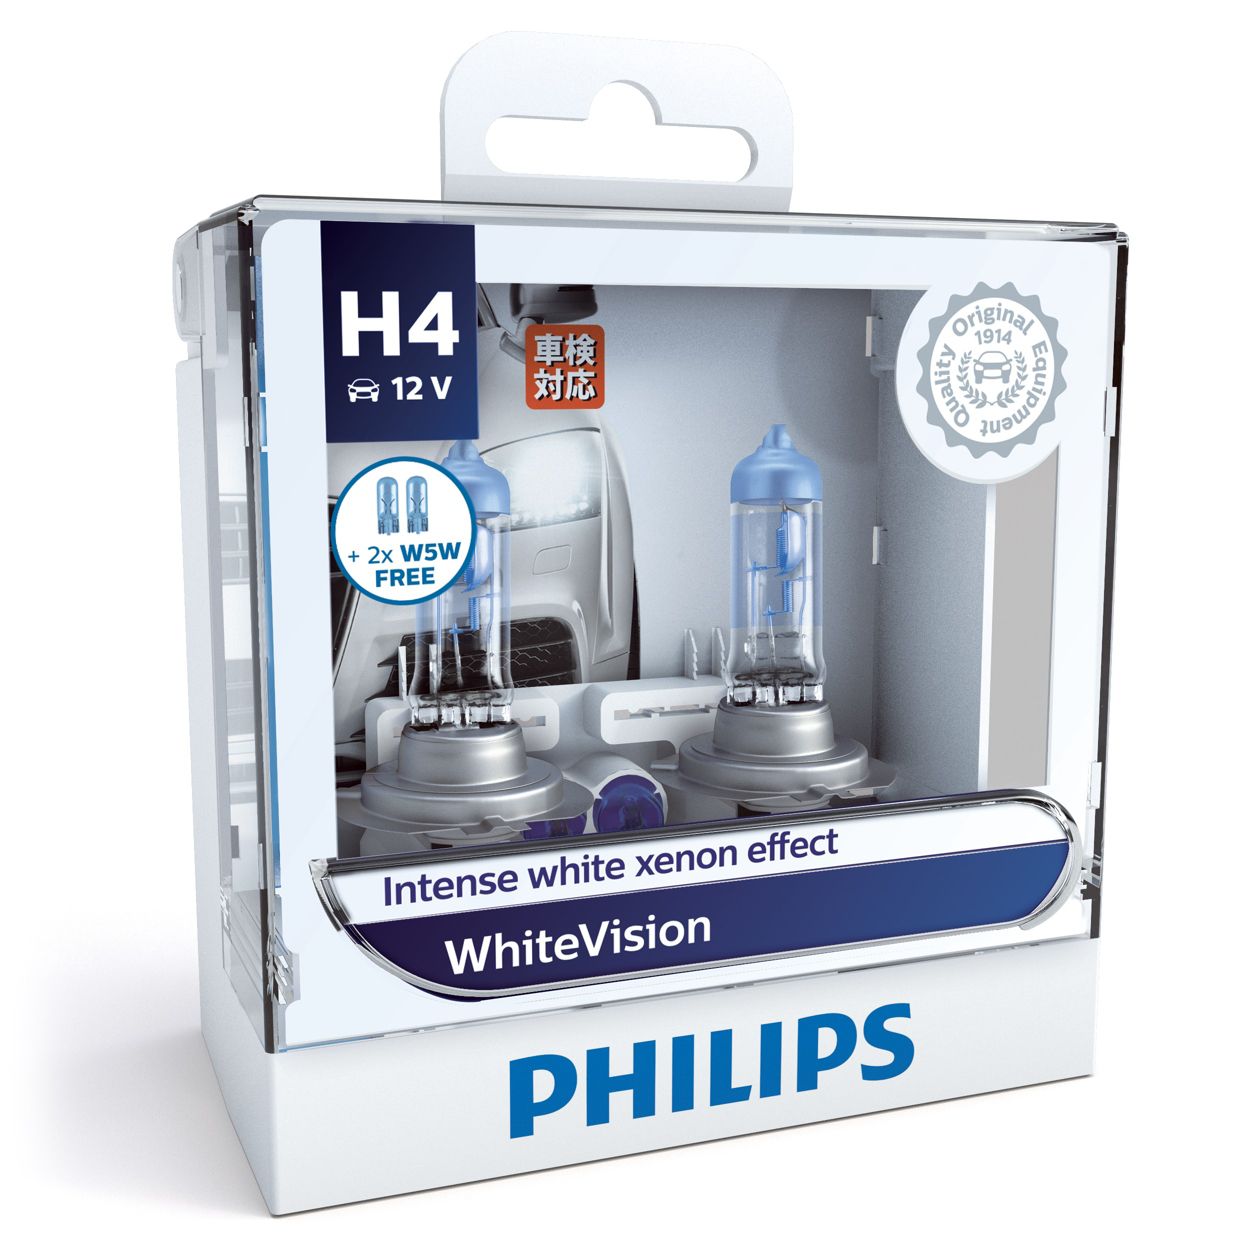 Lampara Philips H7 White Vision Ultra + W5w